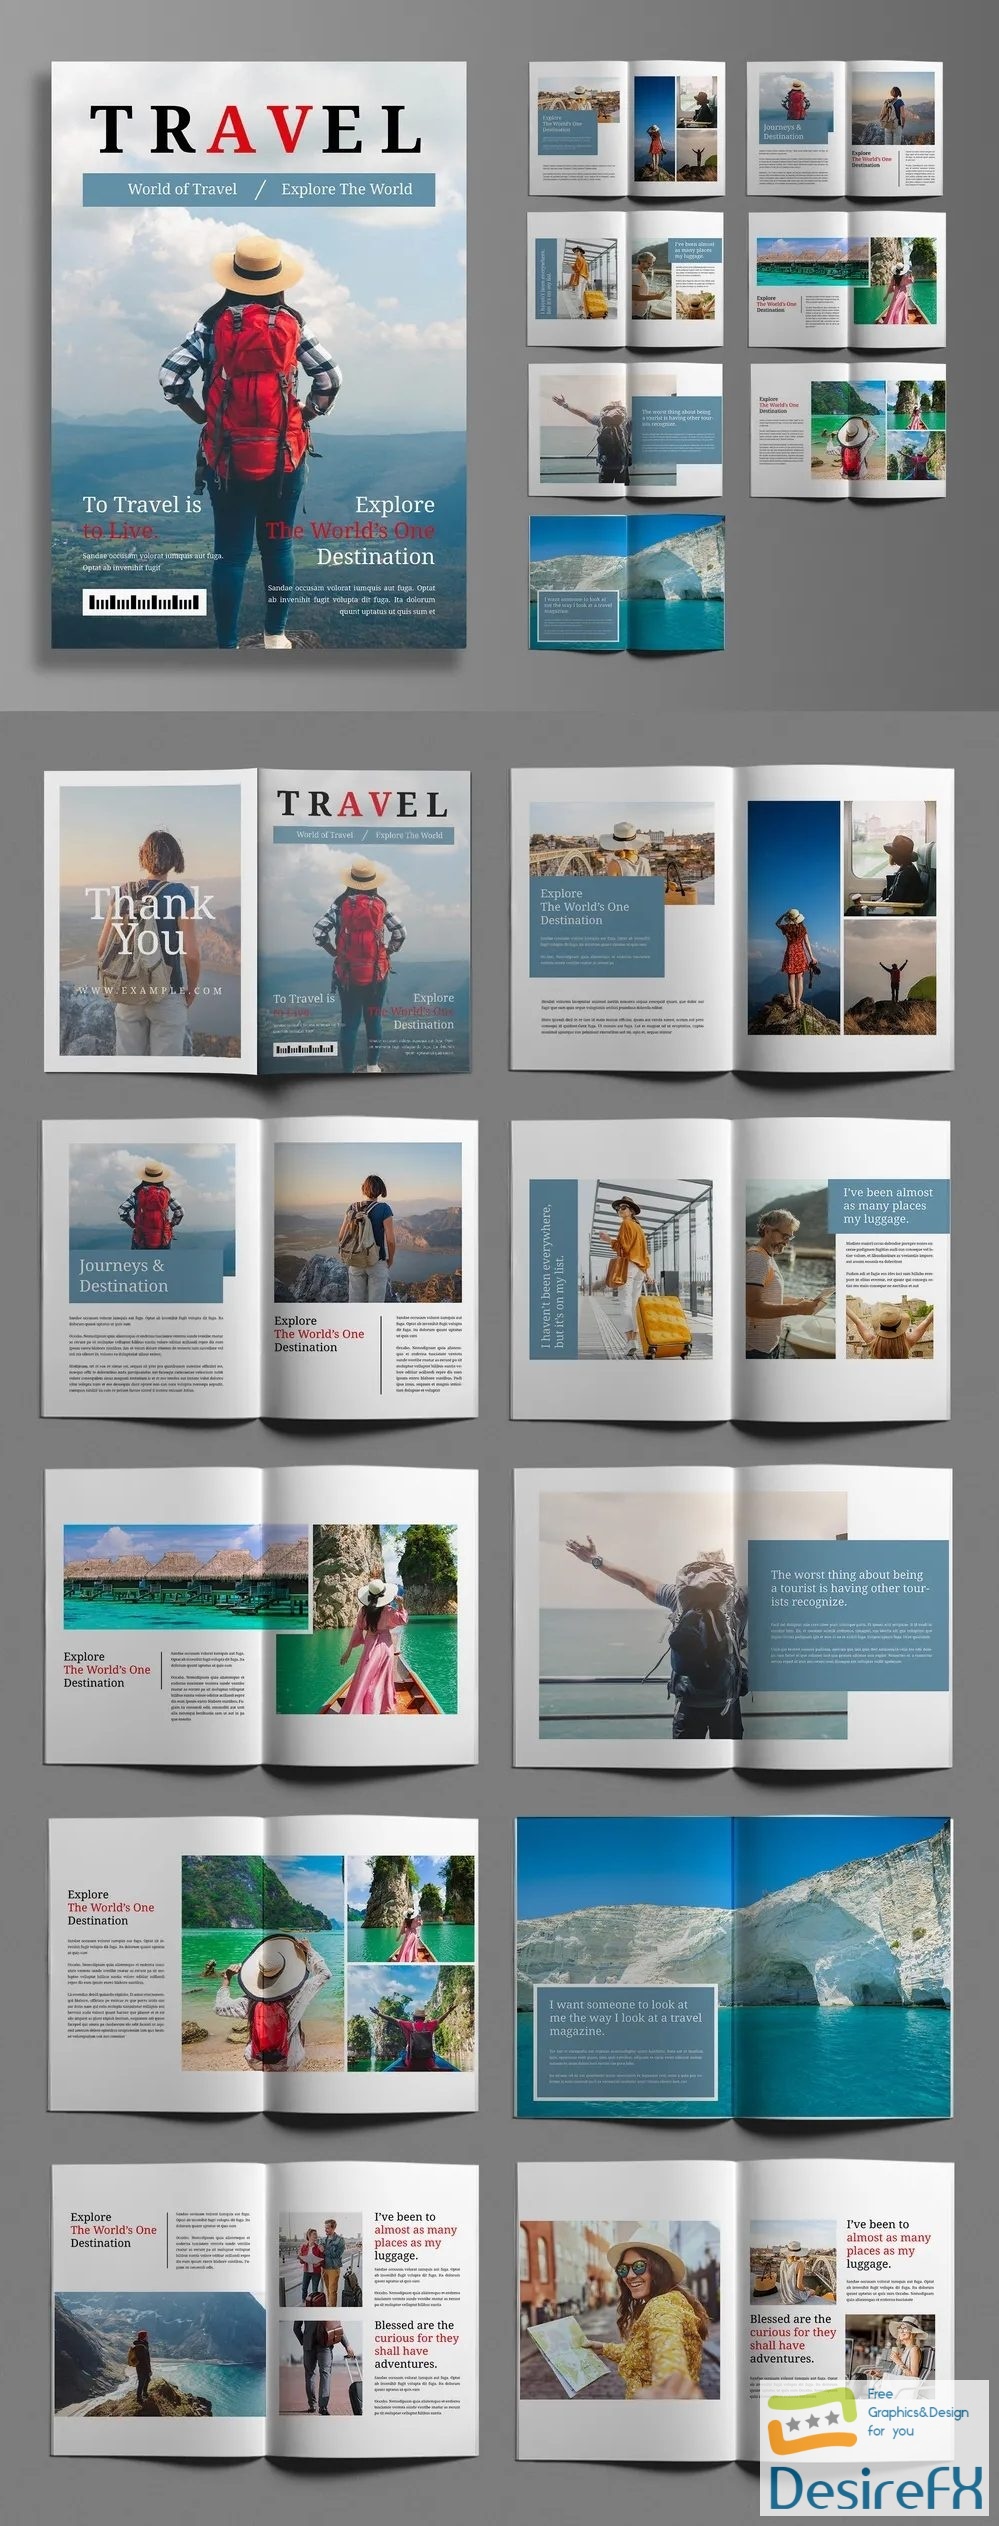 Adobestock - Travel Magazine Layout 718530071